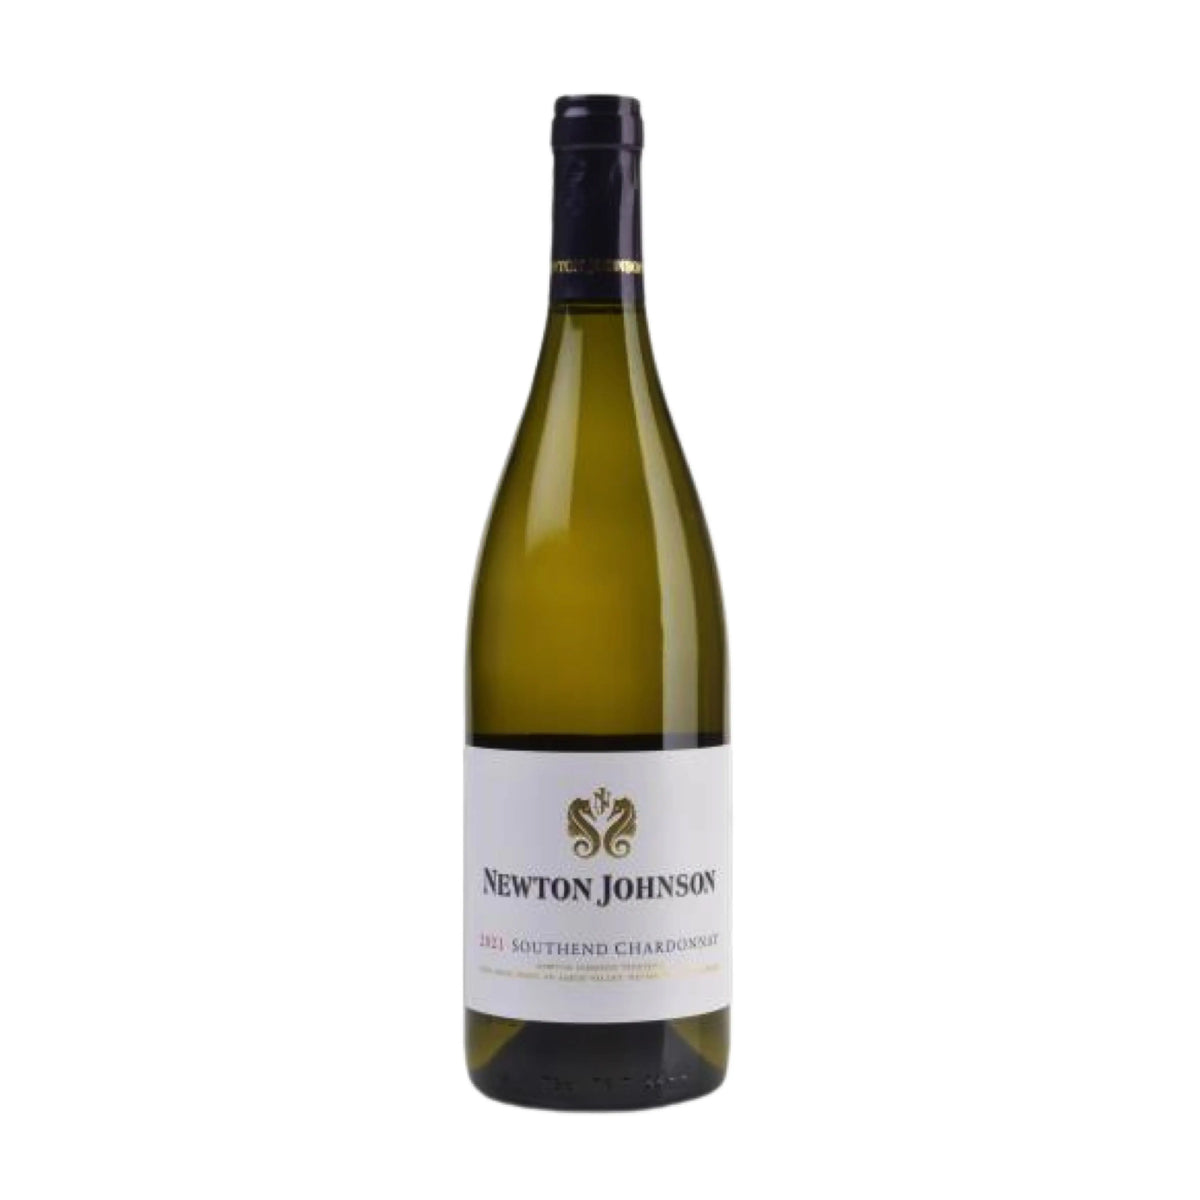 Newton Johnson-Weißwein-Chardonnay-2021 Southend Chardonnay Hermel en Aarde Valley-WINECOM